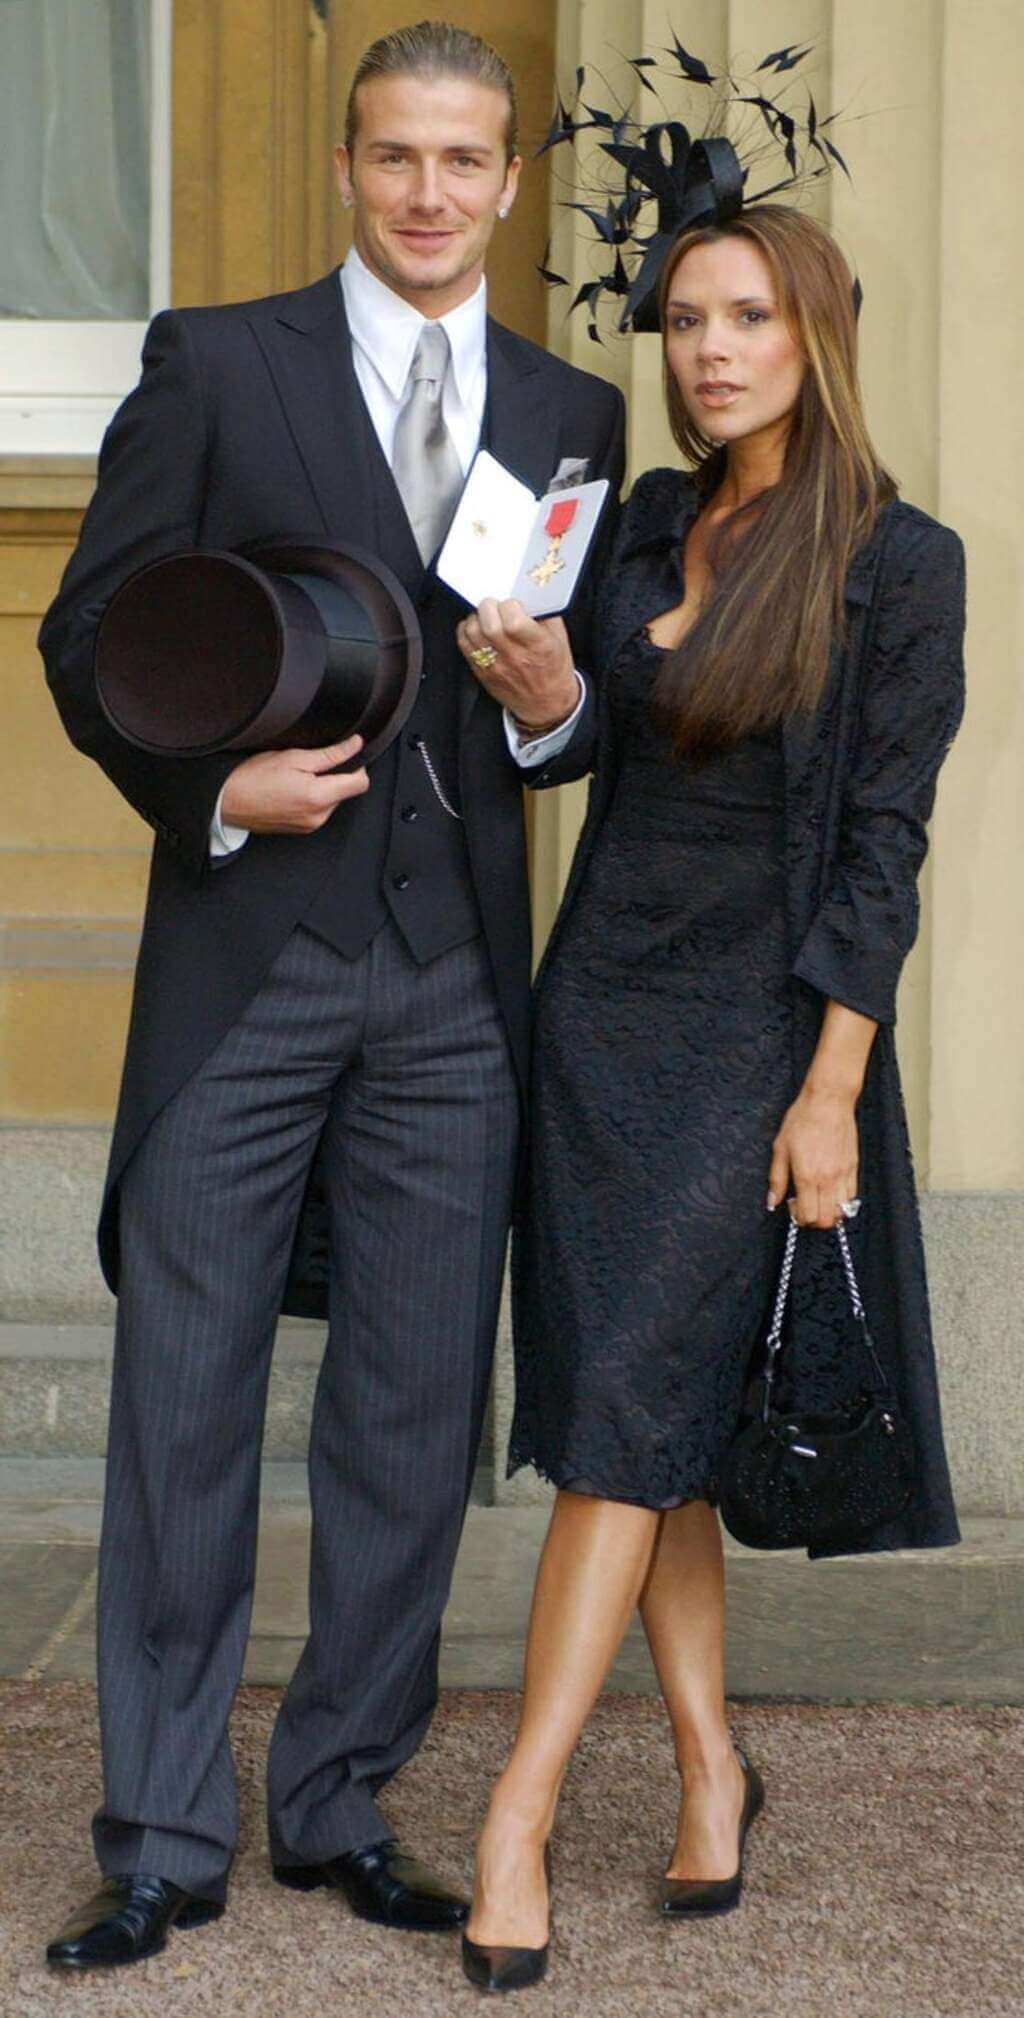 Victoria and David Beckham from “Posh and Becks”